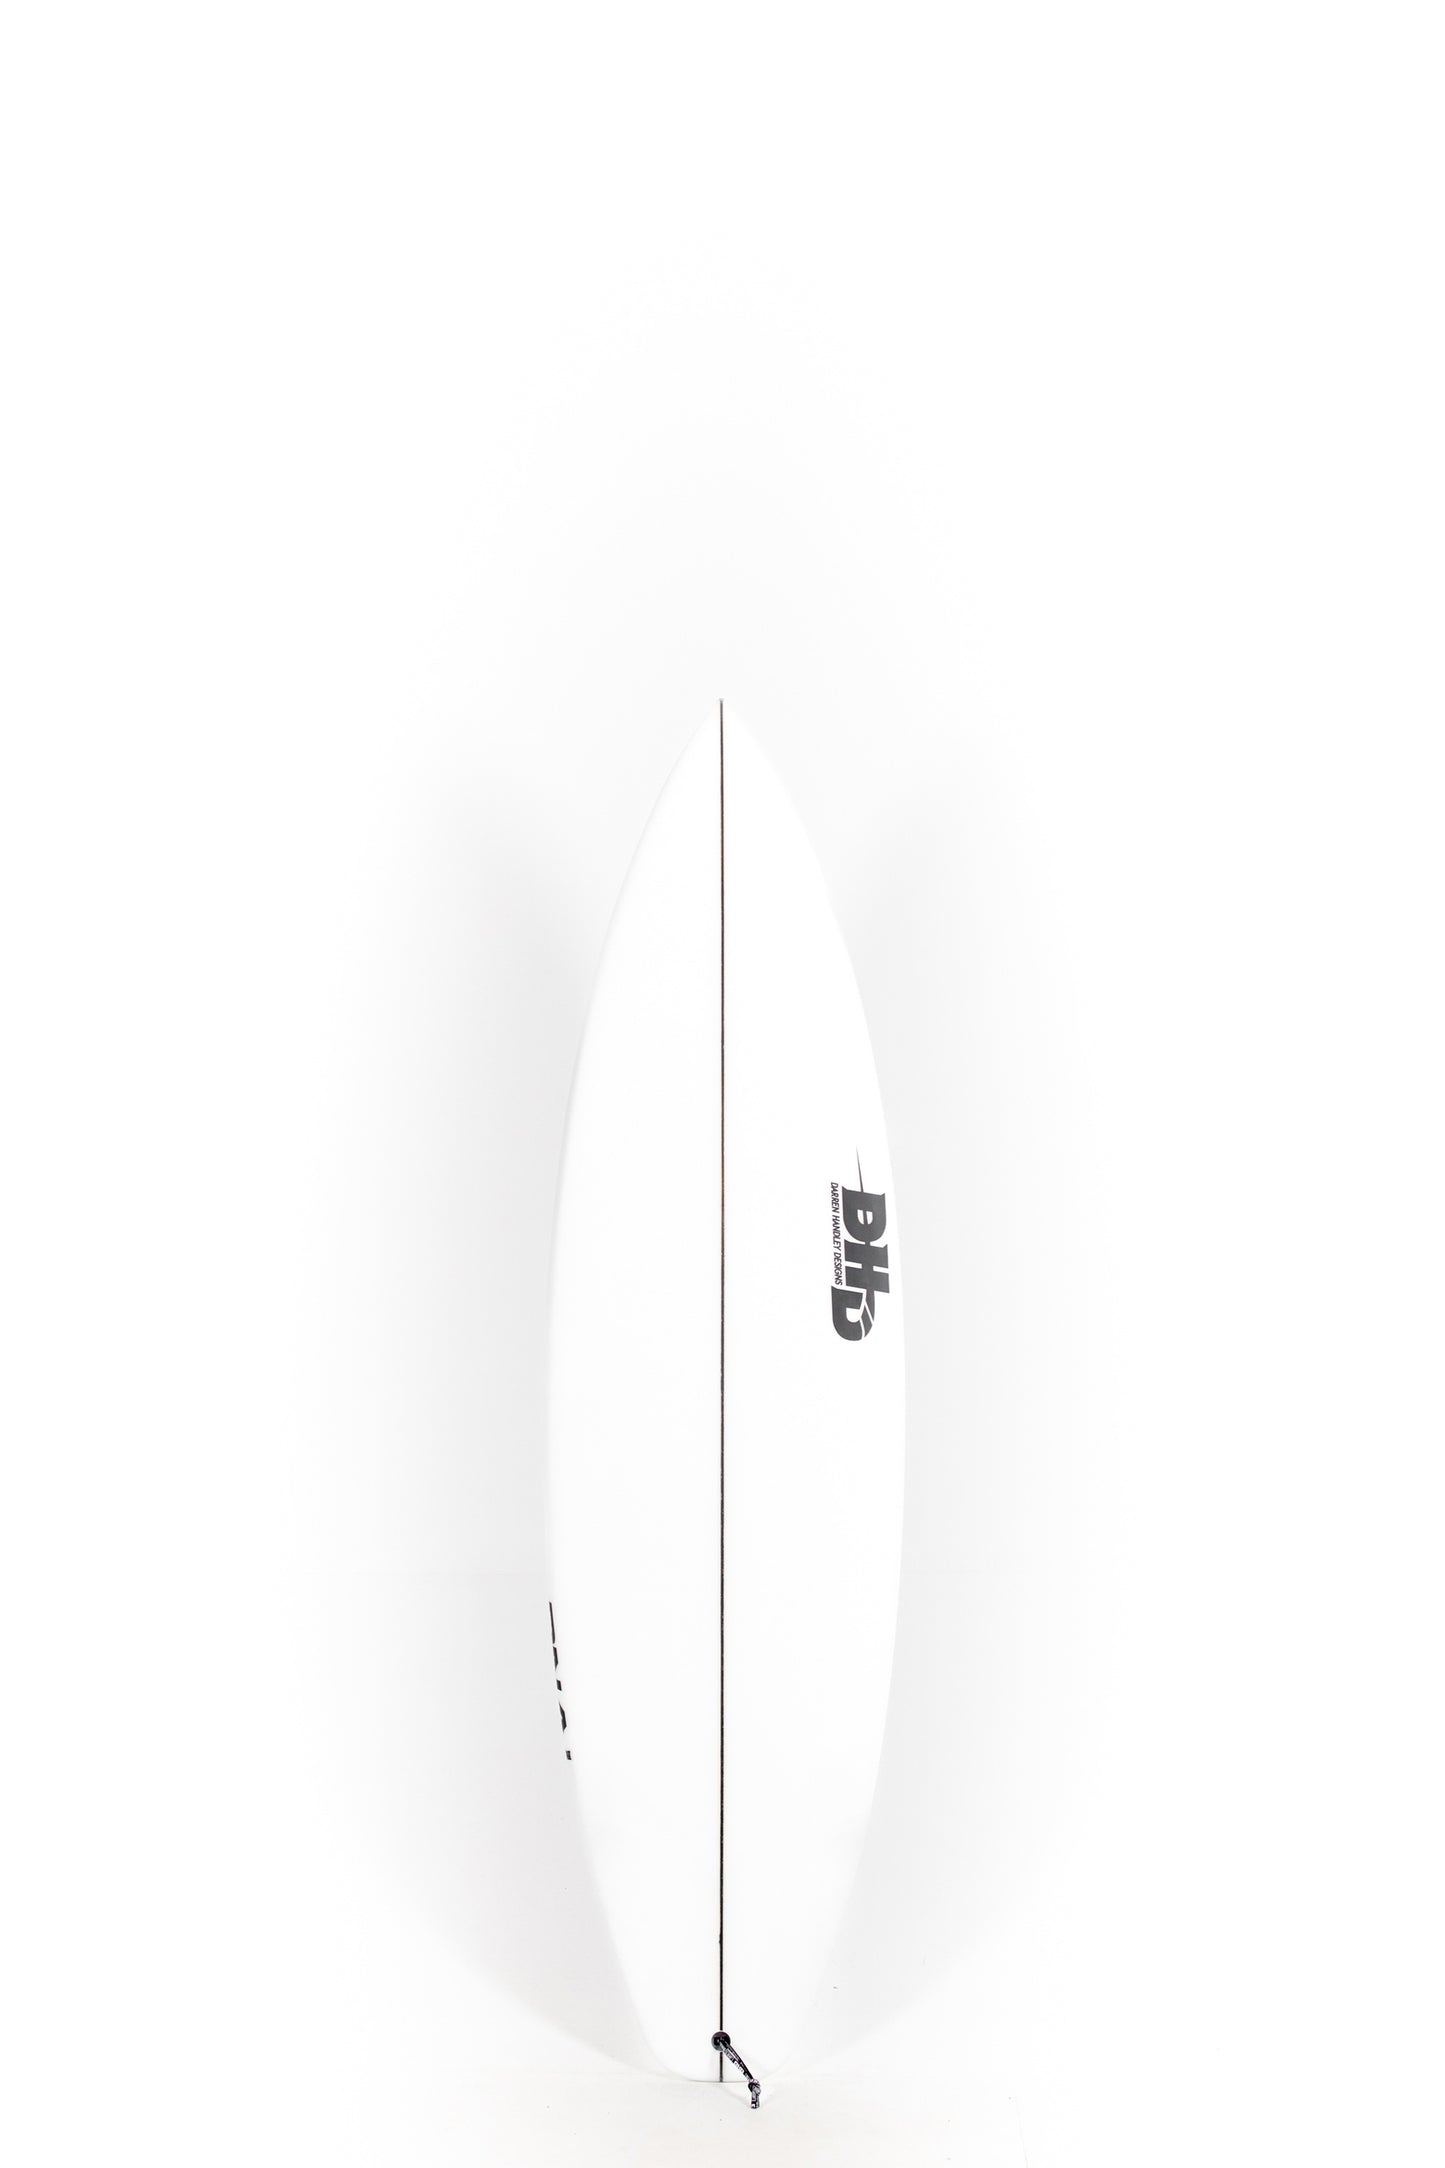 Pukas Surf Shop - DHD - DNA by Darren Handley - 6'0" x 19 x 2 3/8 x 28,5L - DHDDNA60